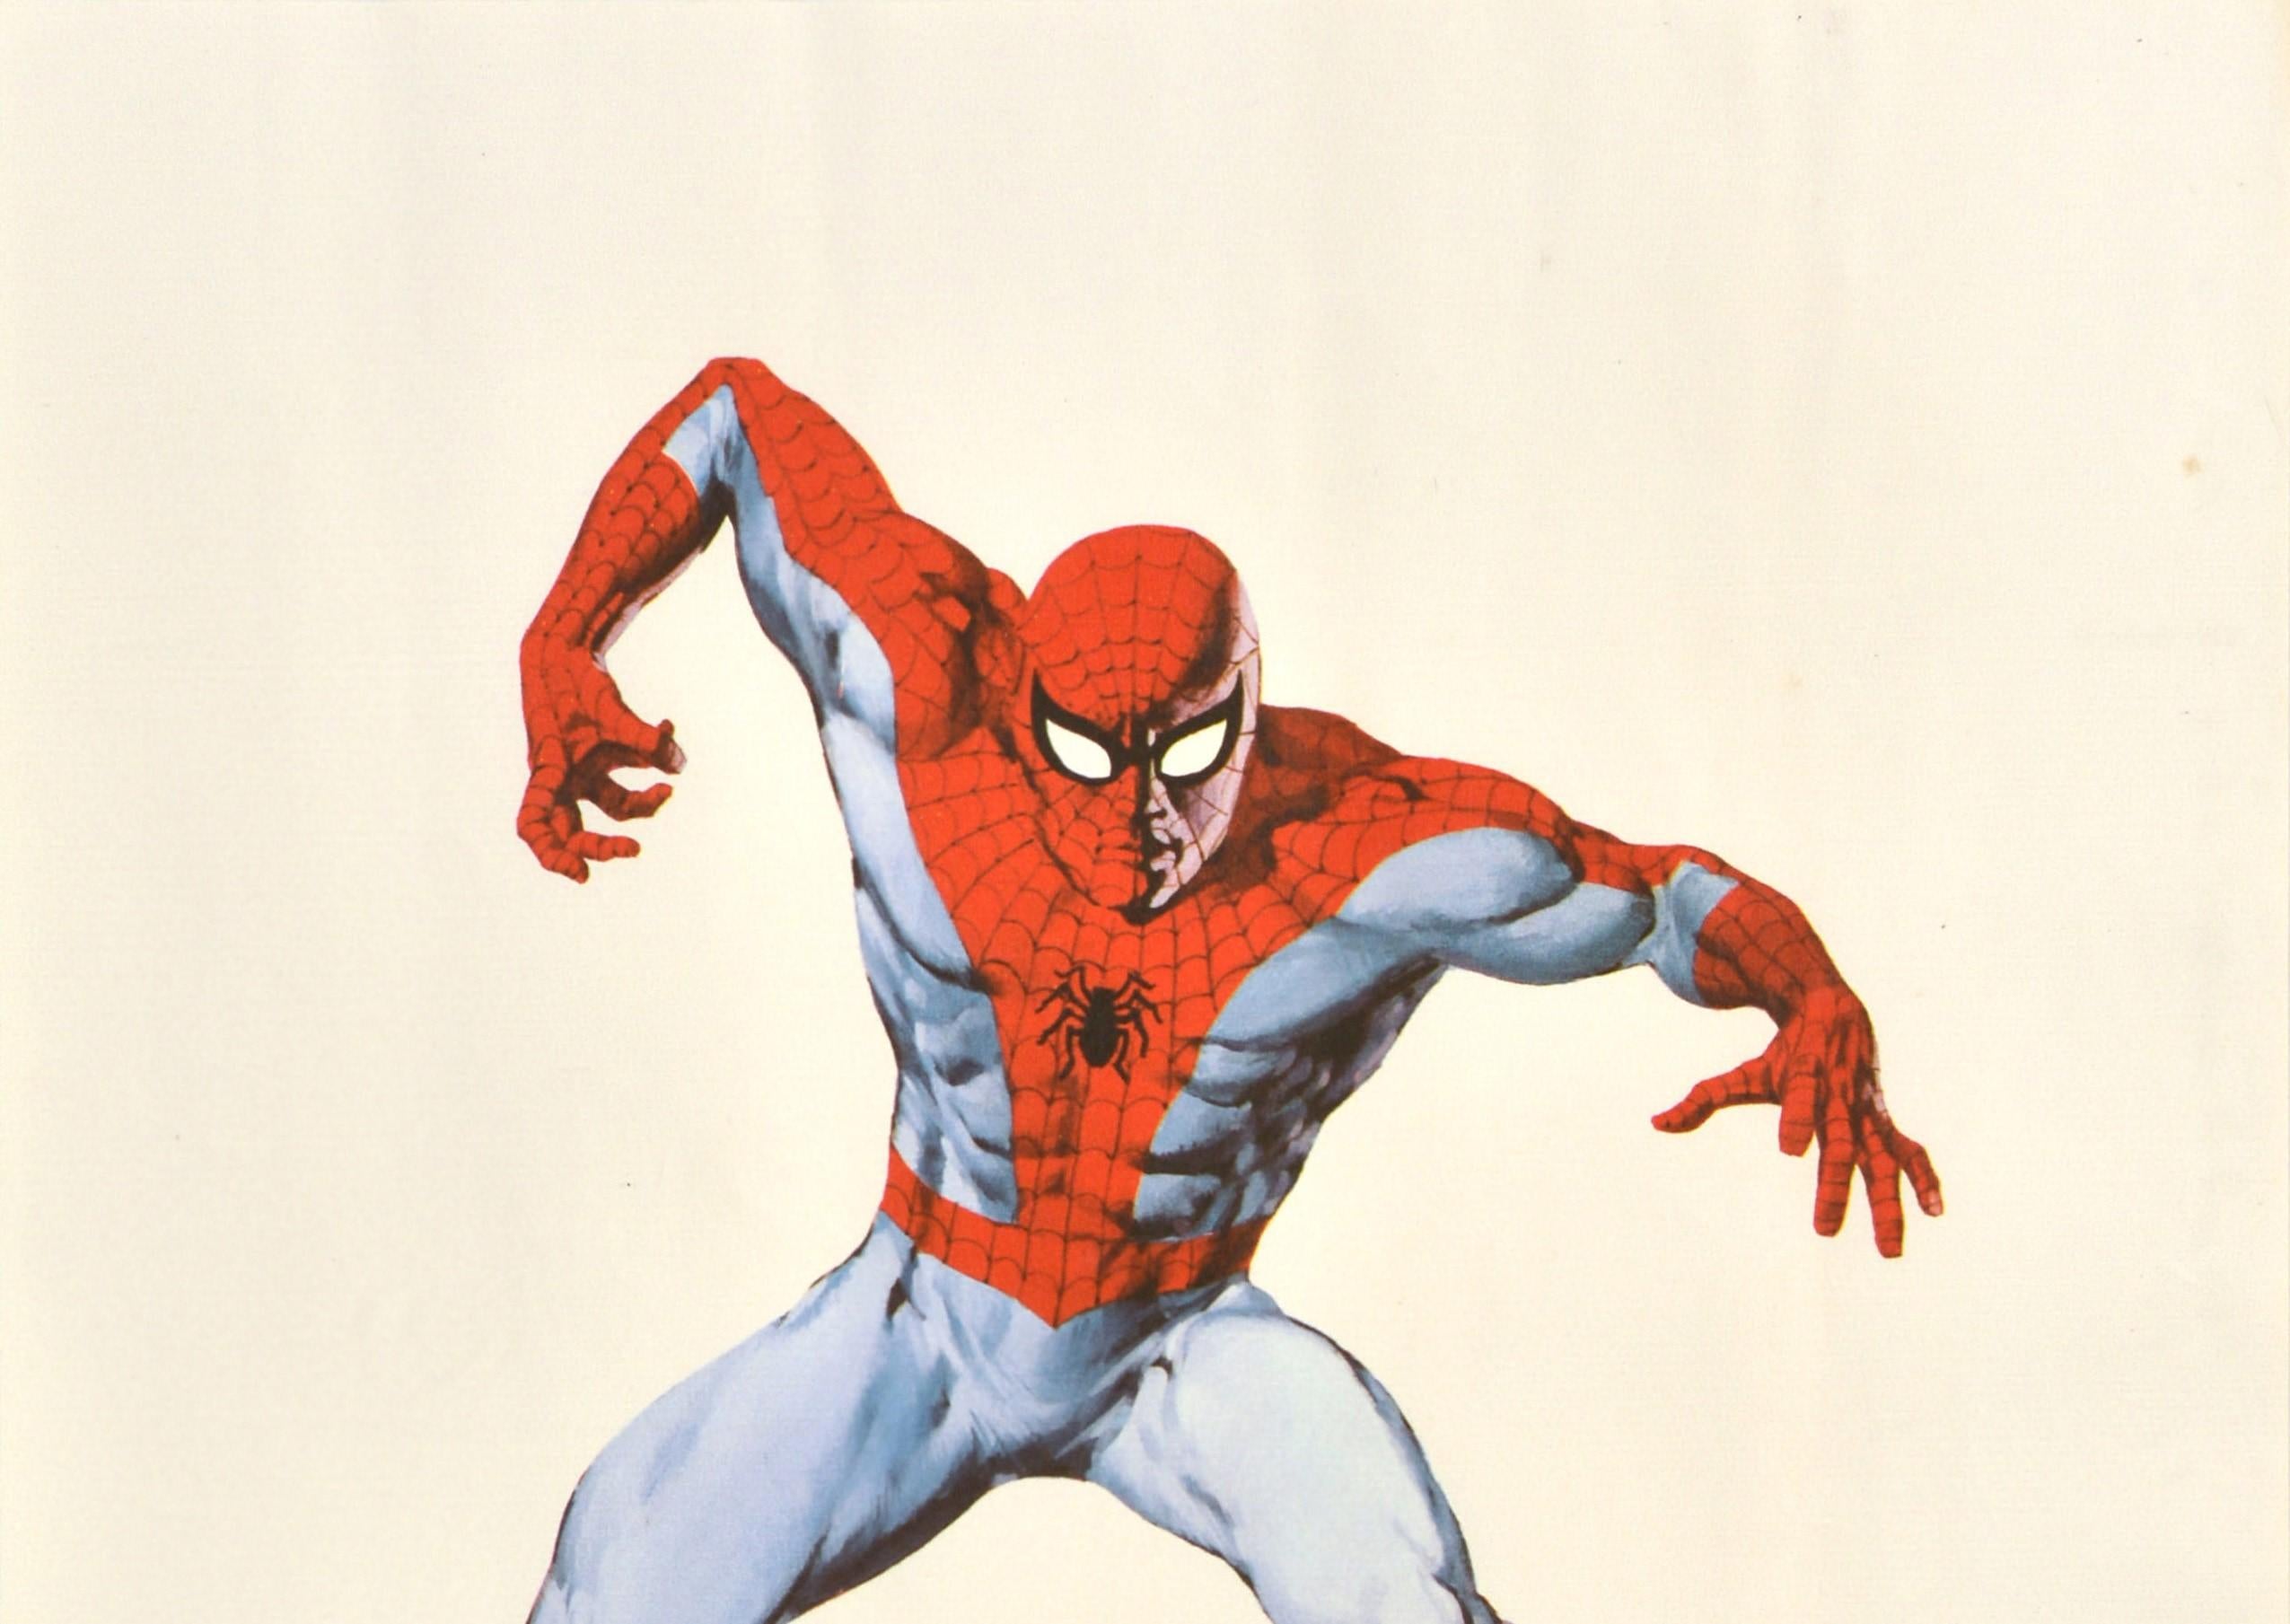 Original Vintage Marvel Film Poster Spiderman Animated Comic Superhero Movie Art - Print by Lopez Espi